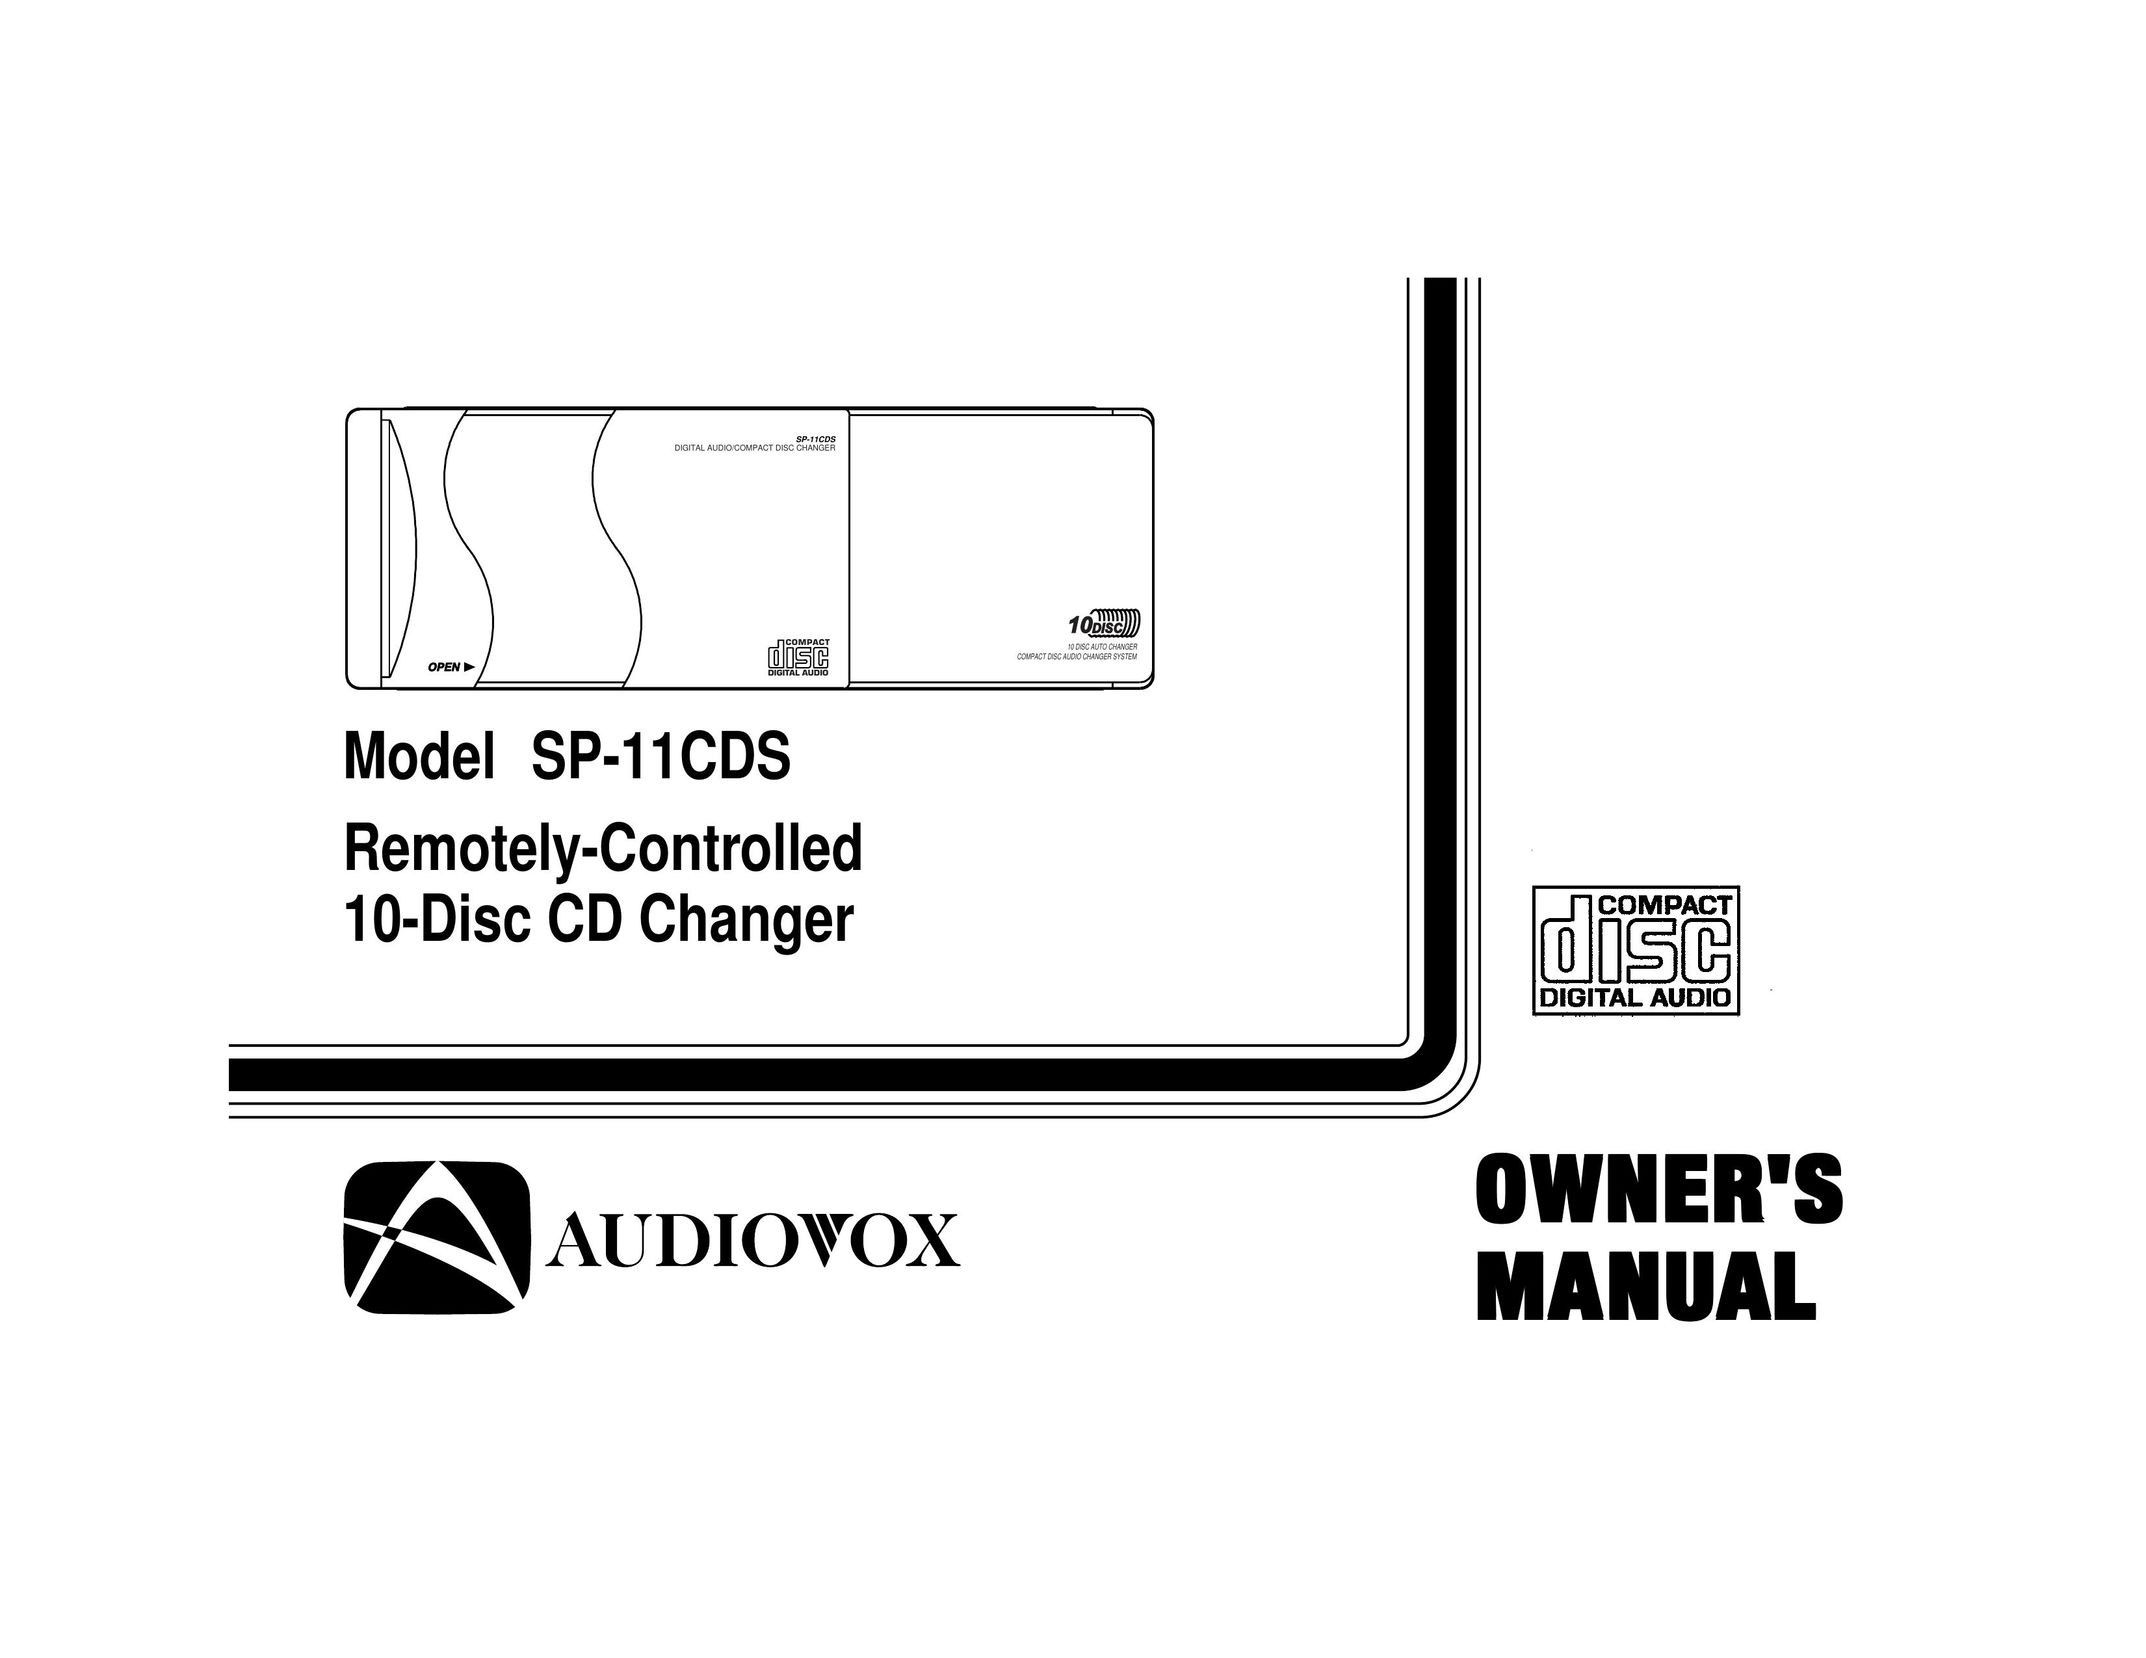 Audiovox SP-11CDS CD Player User Manual